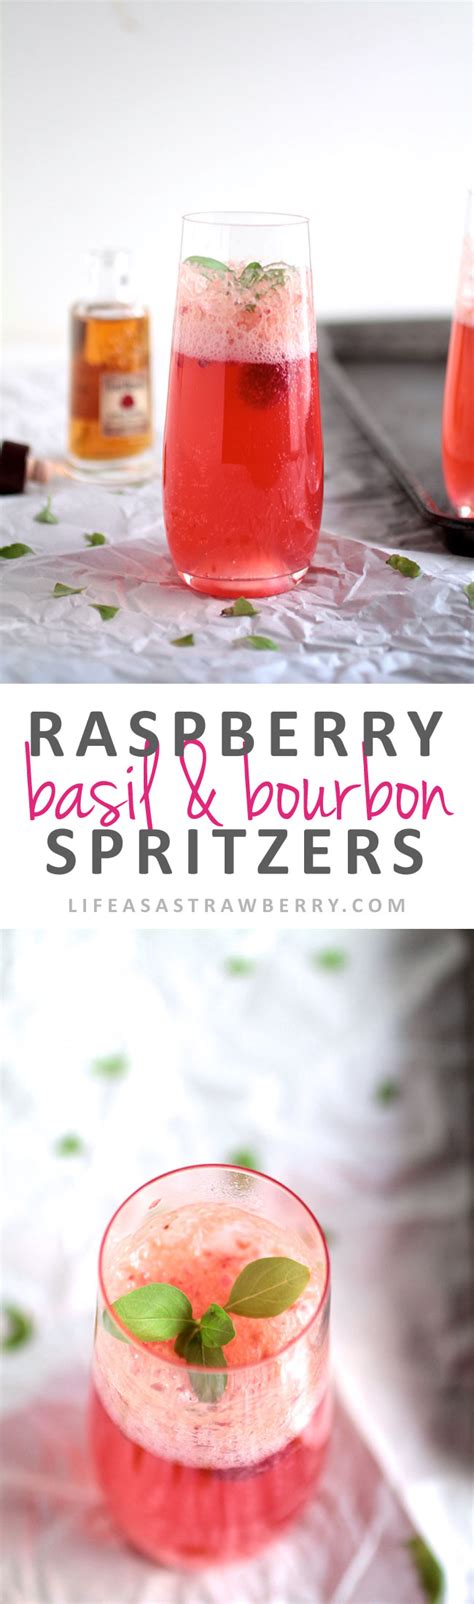 raspberry-basil-bourbon-spritzers-life-as-a-strawberry image